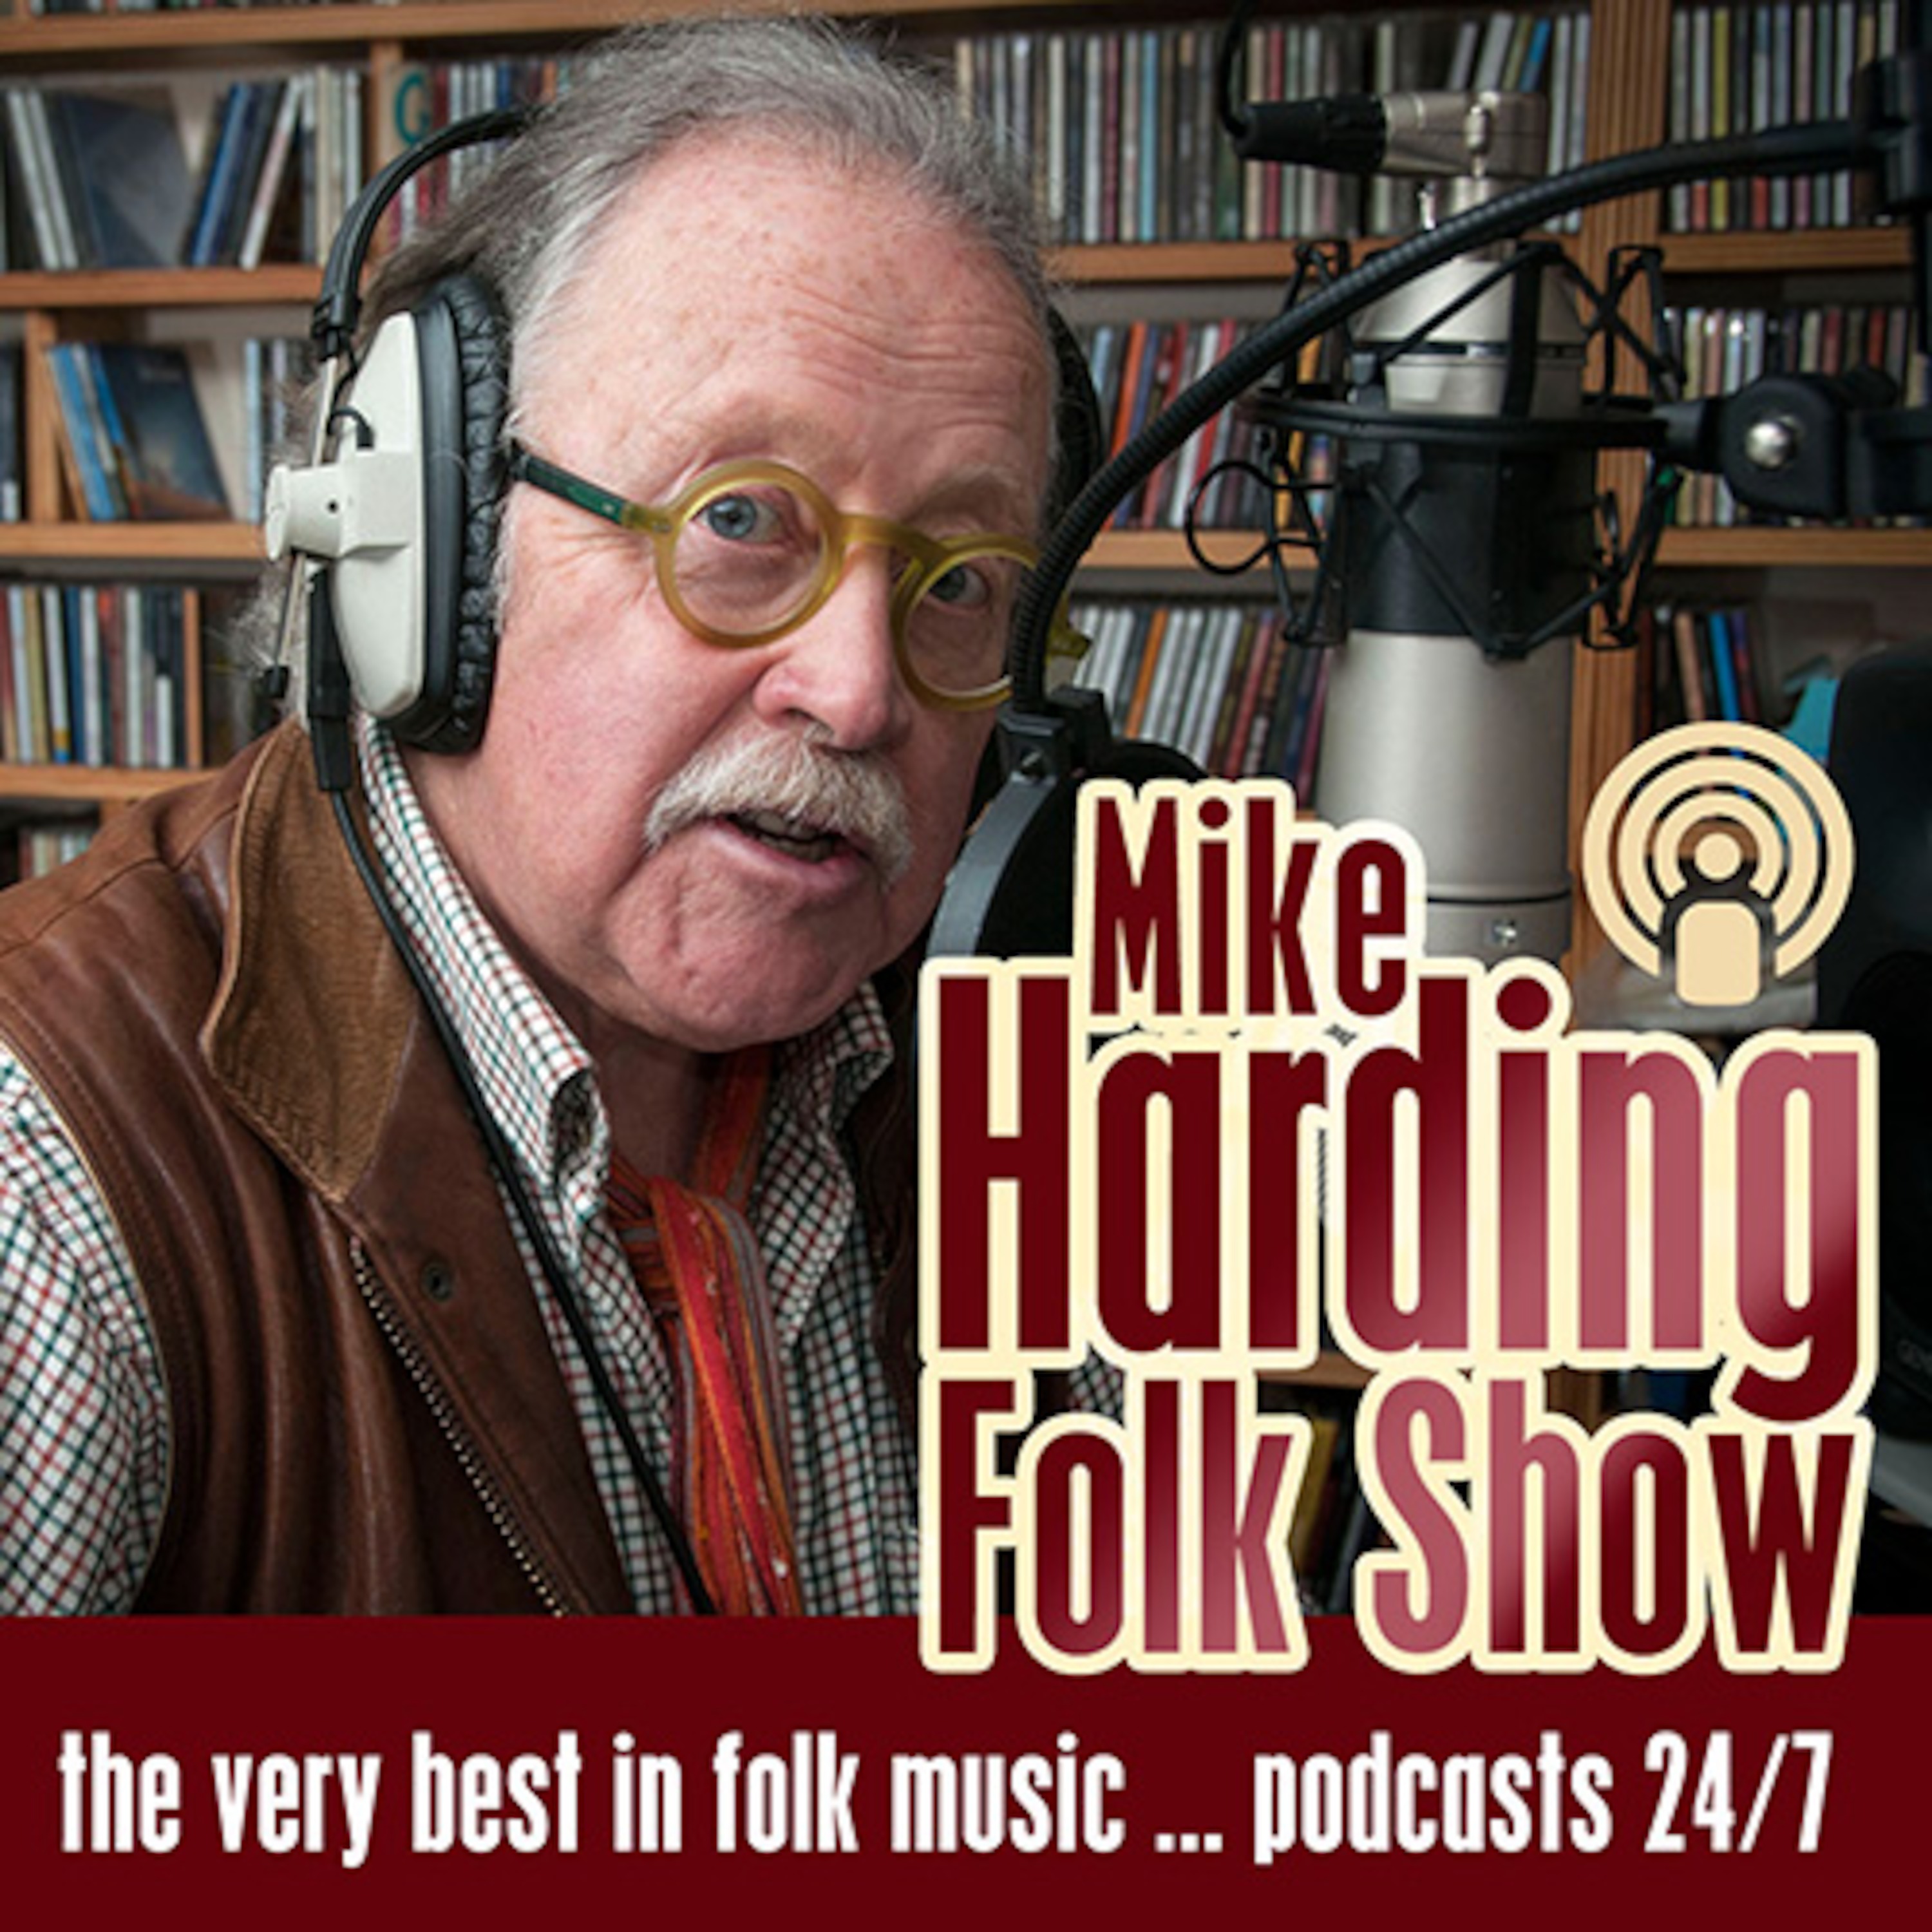 Mike Harding Folk Show 02